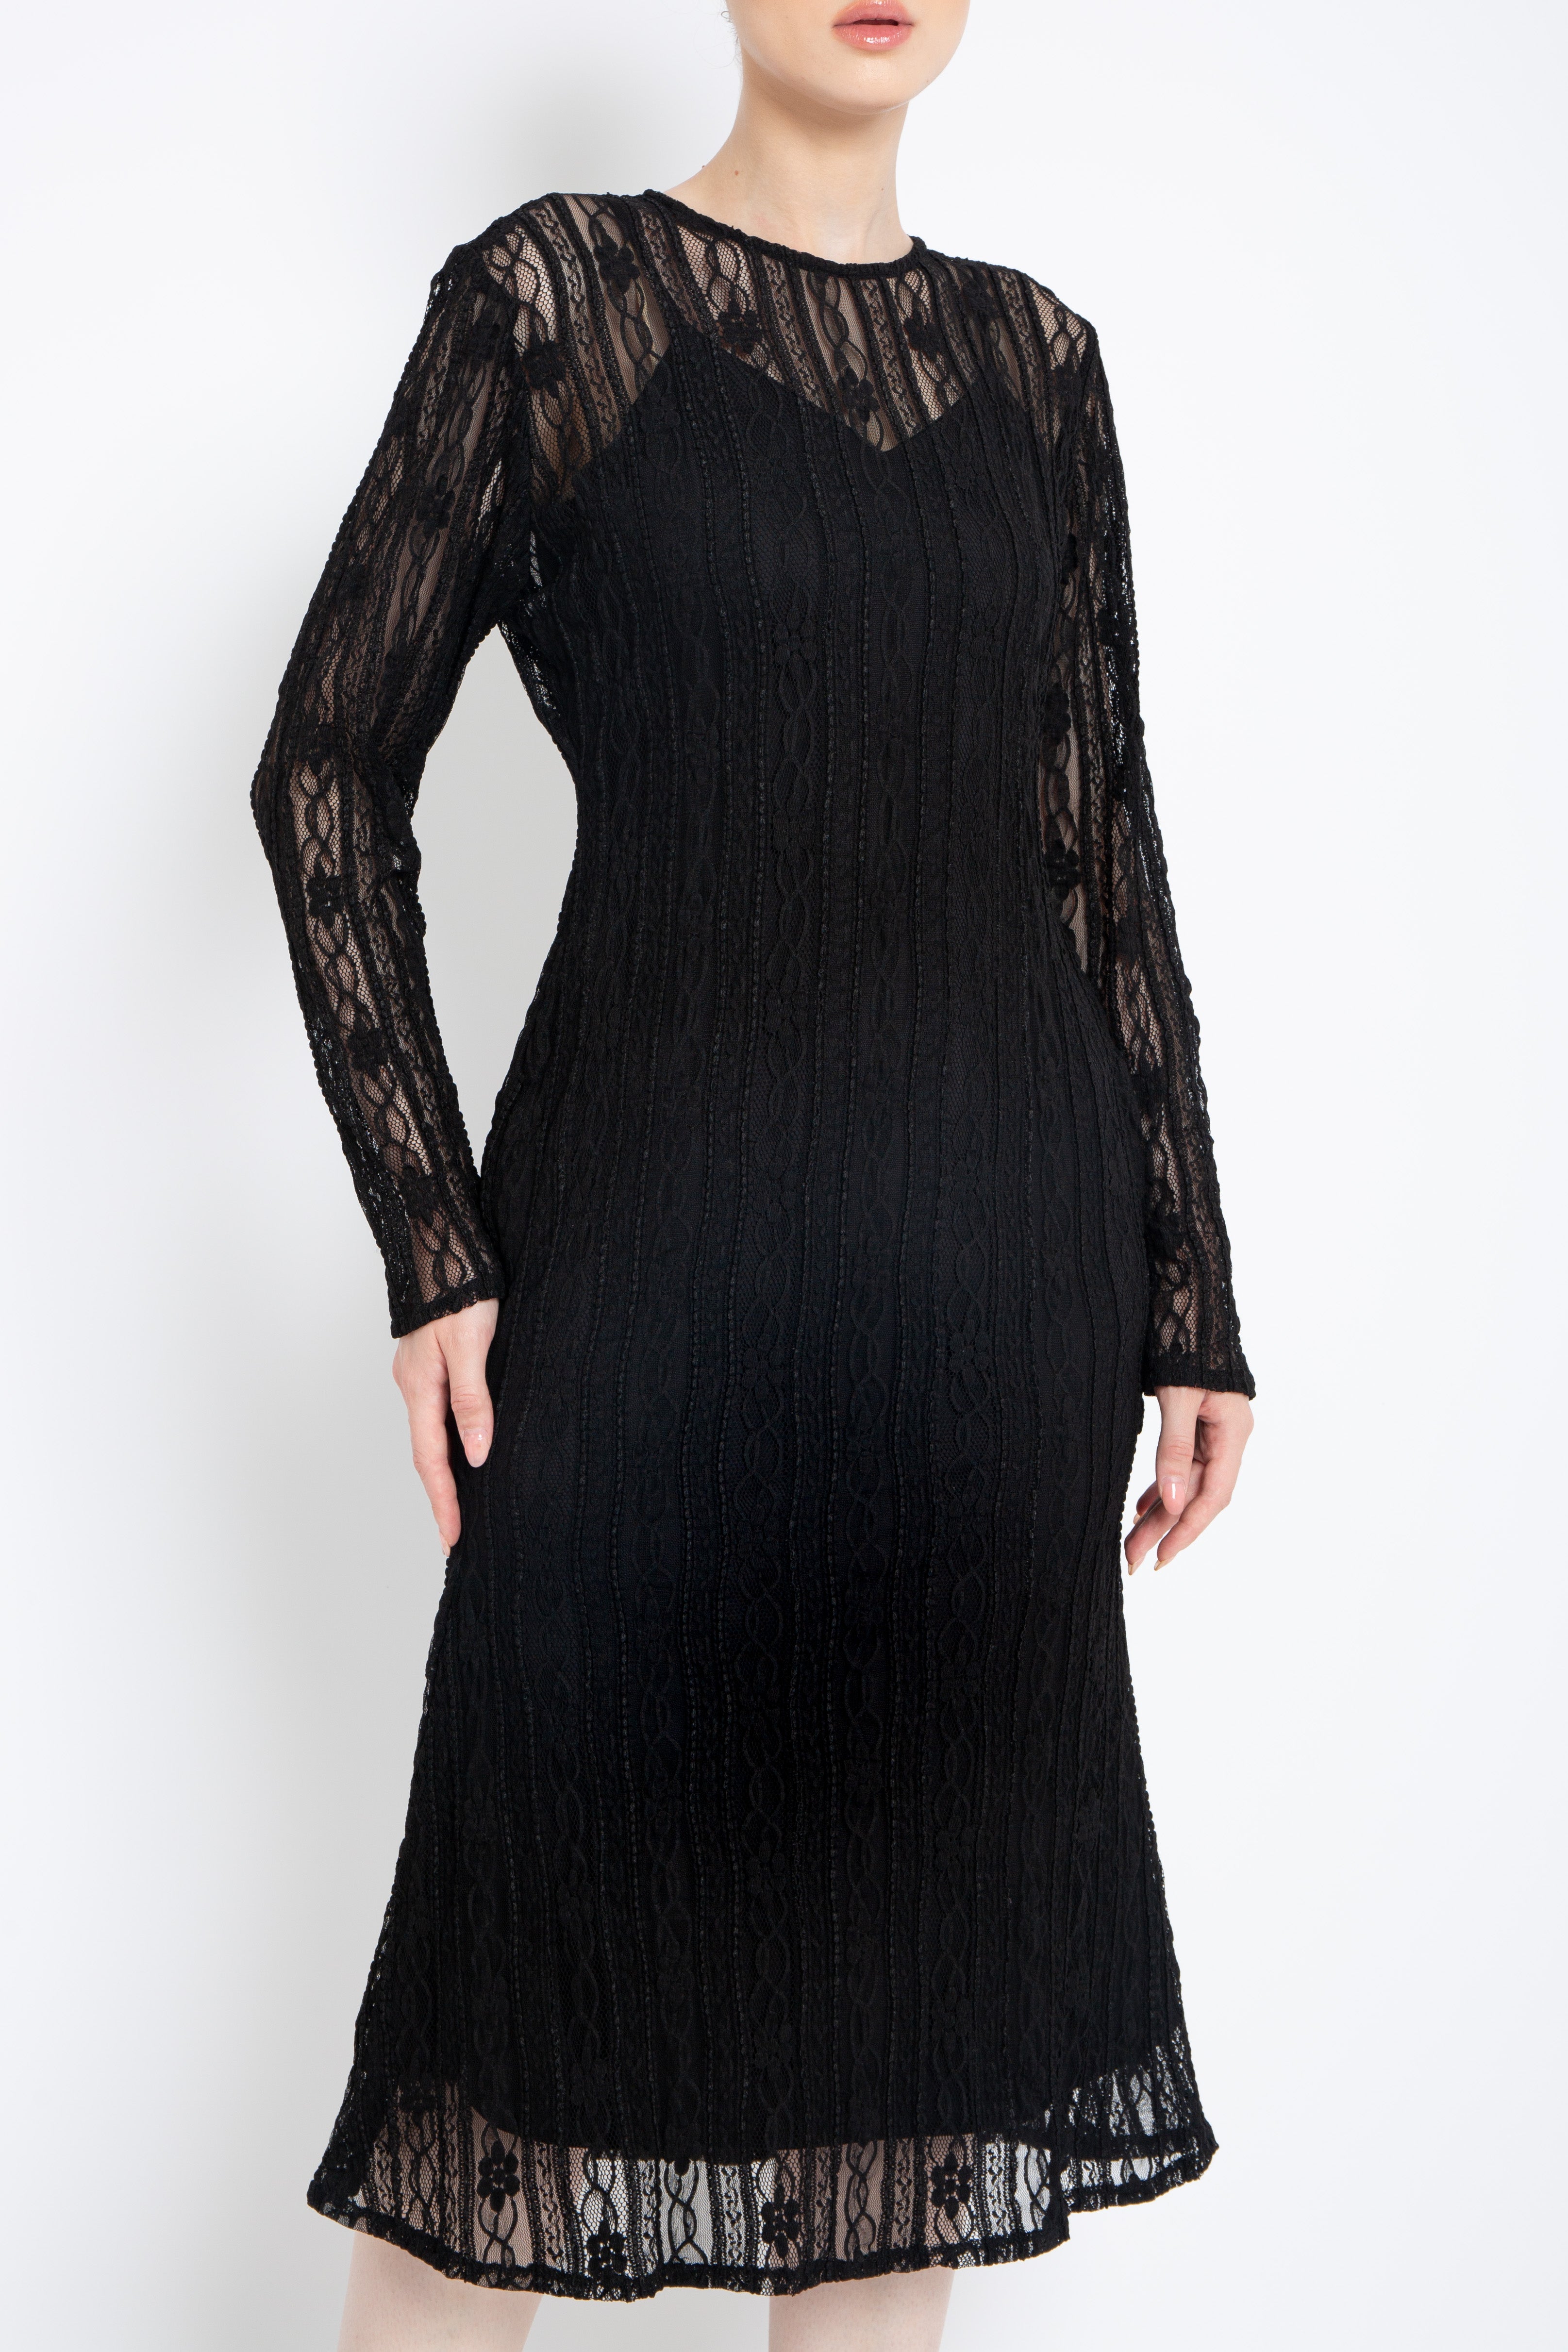 New Sofia Dress in Black